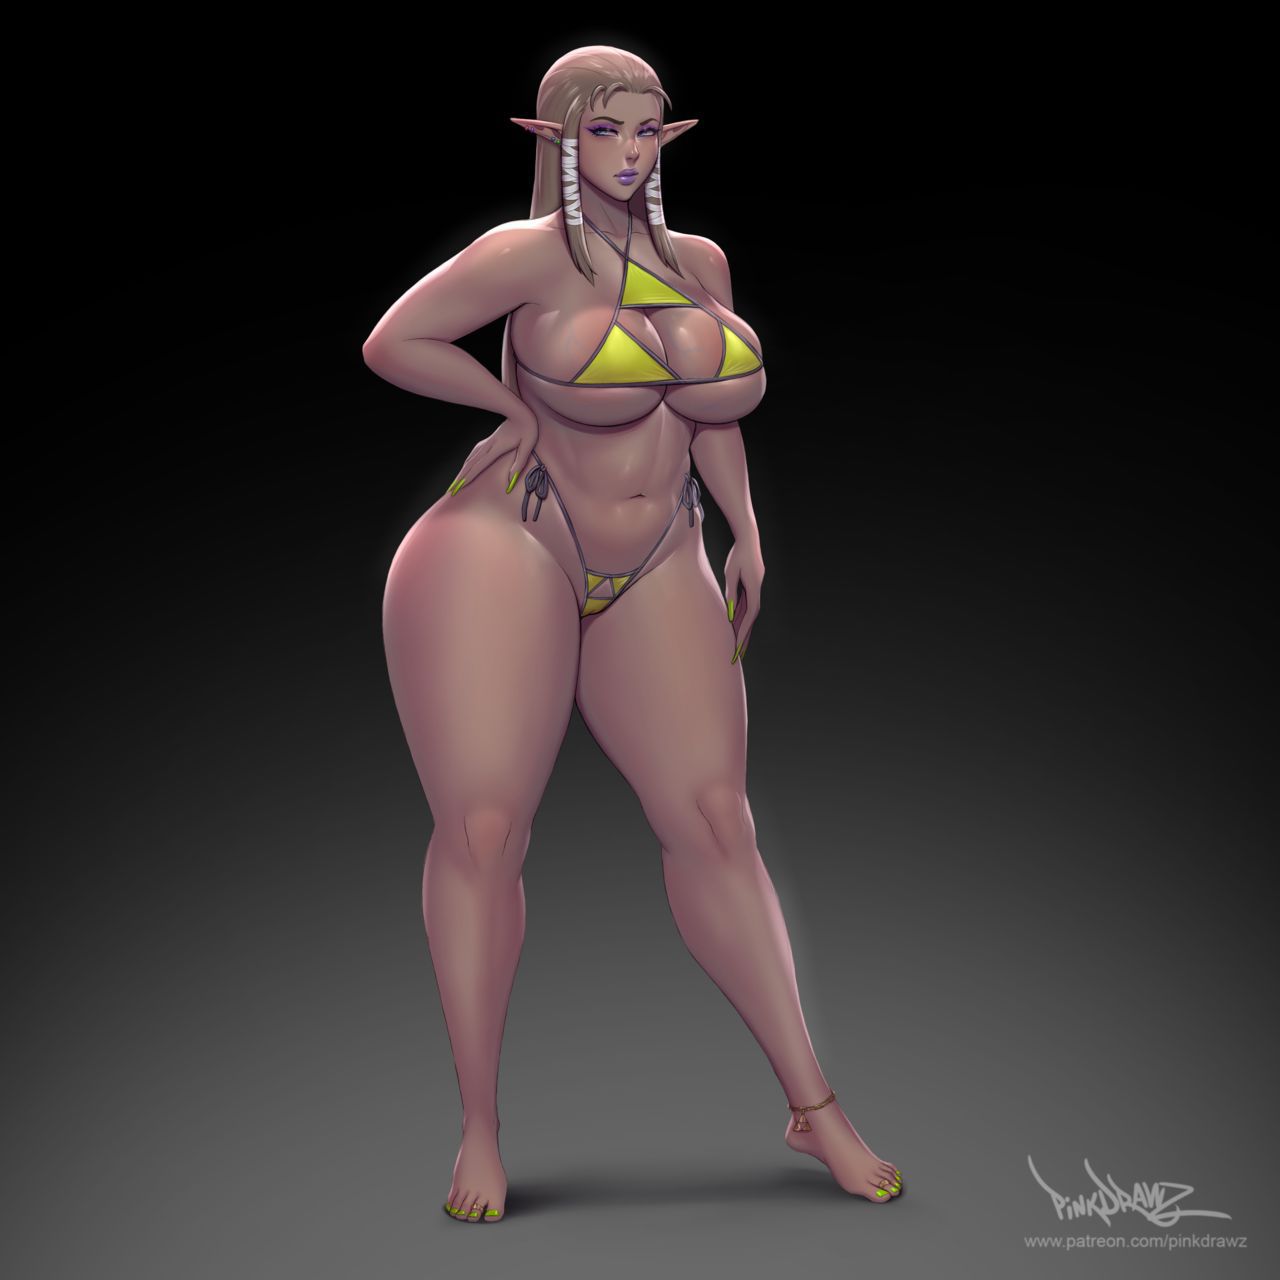 [pinkdrawz] Triforce Bikini (The Legend of Zelda) 3